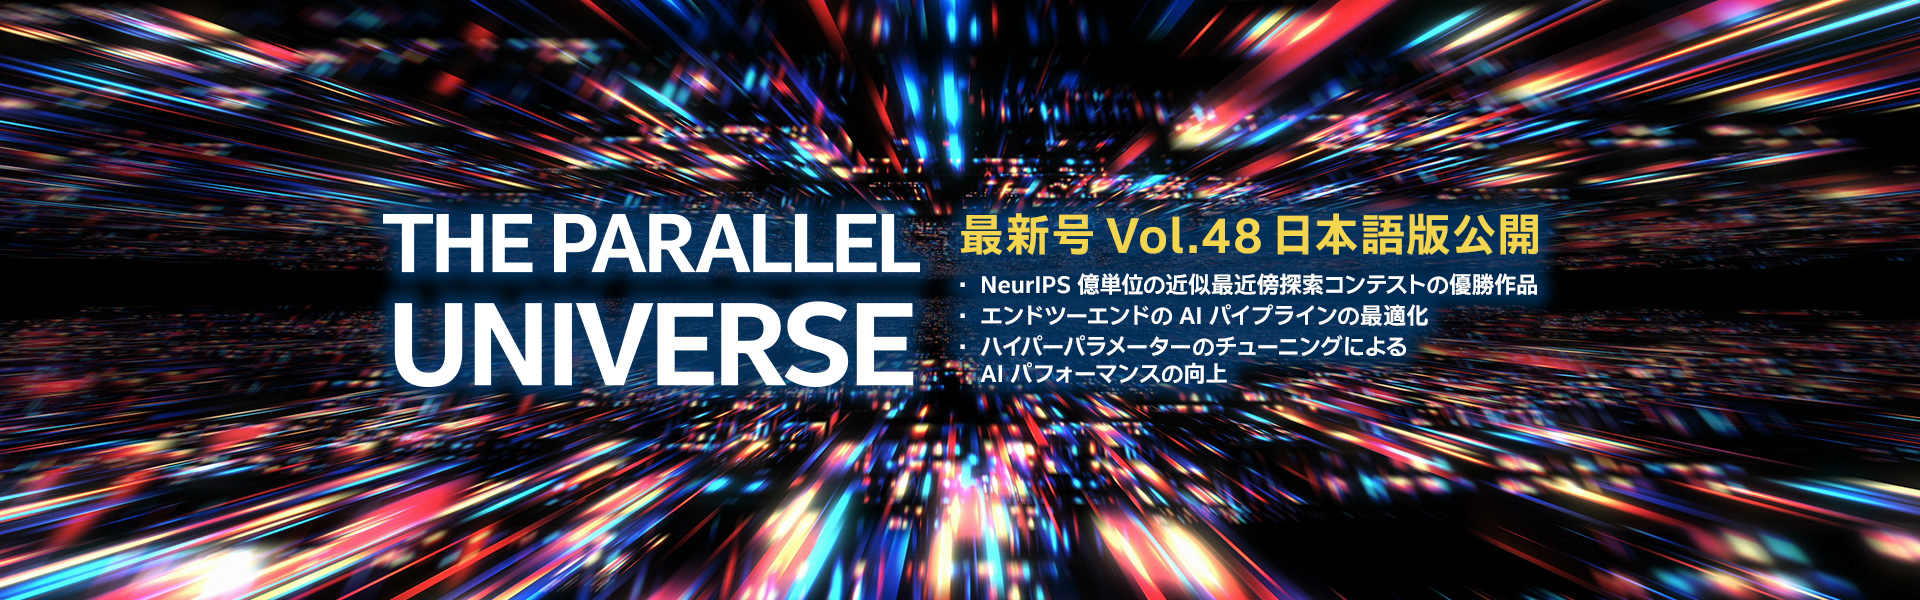 The Parallel Universe 最新号 Vol.48 日本語版公開中